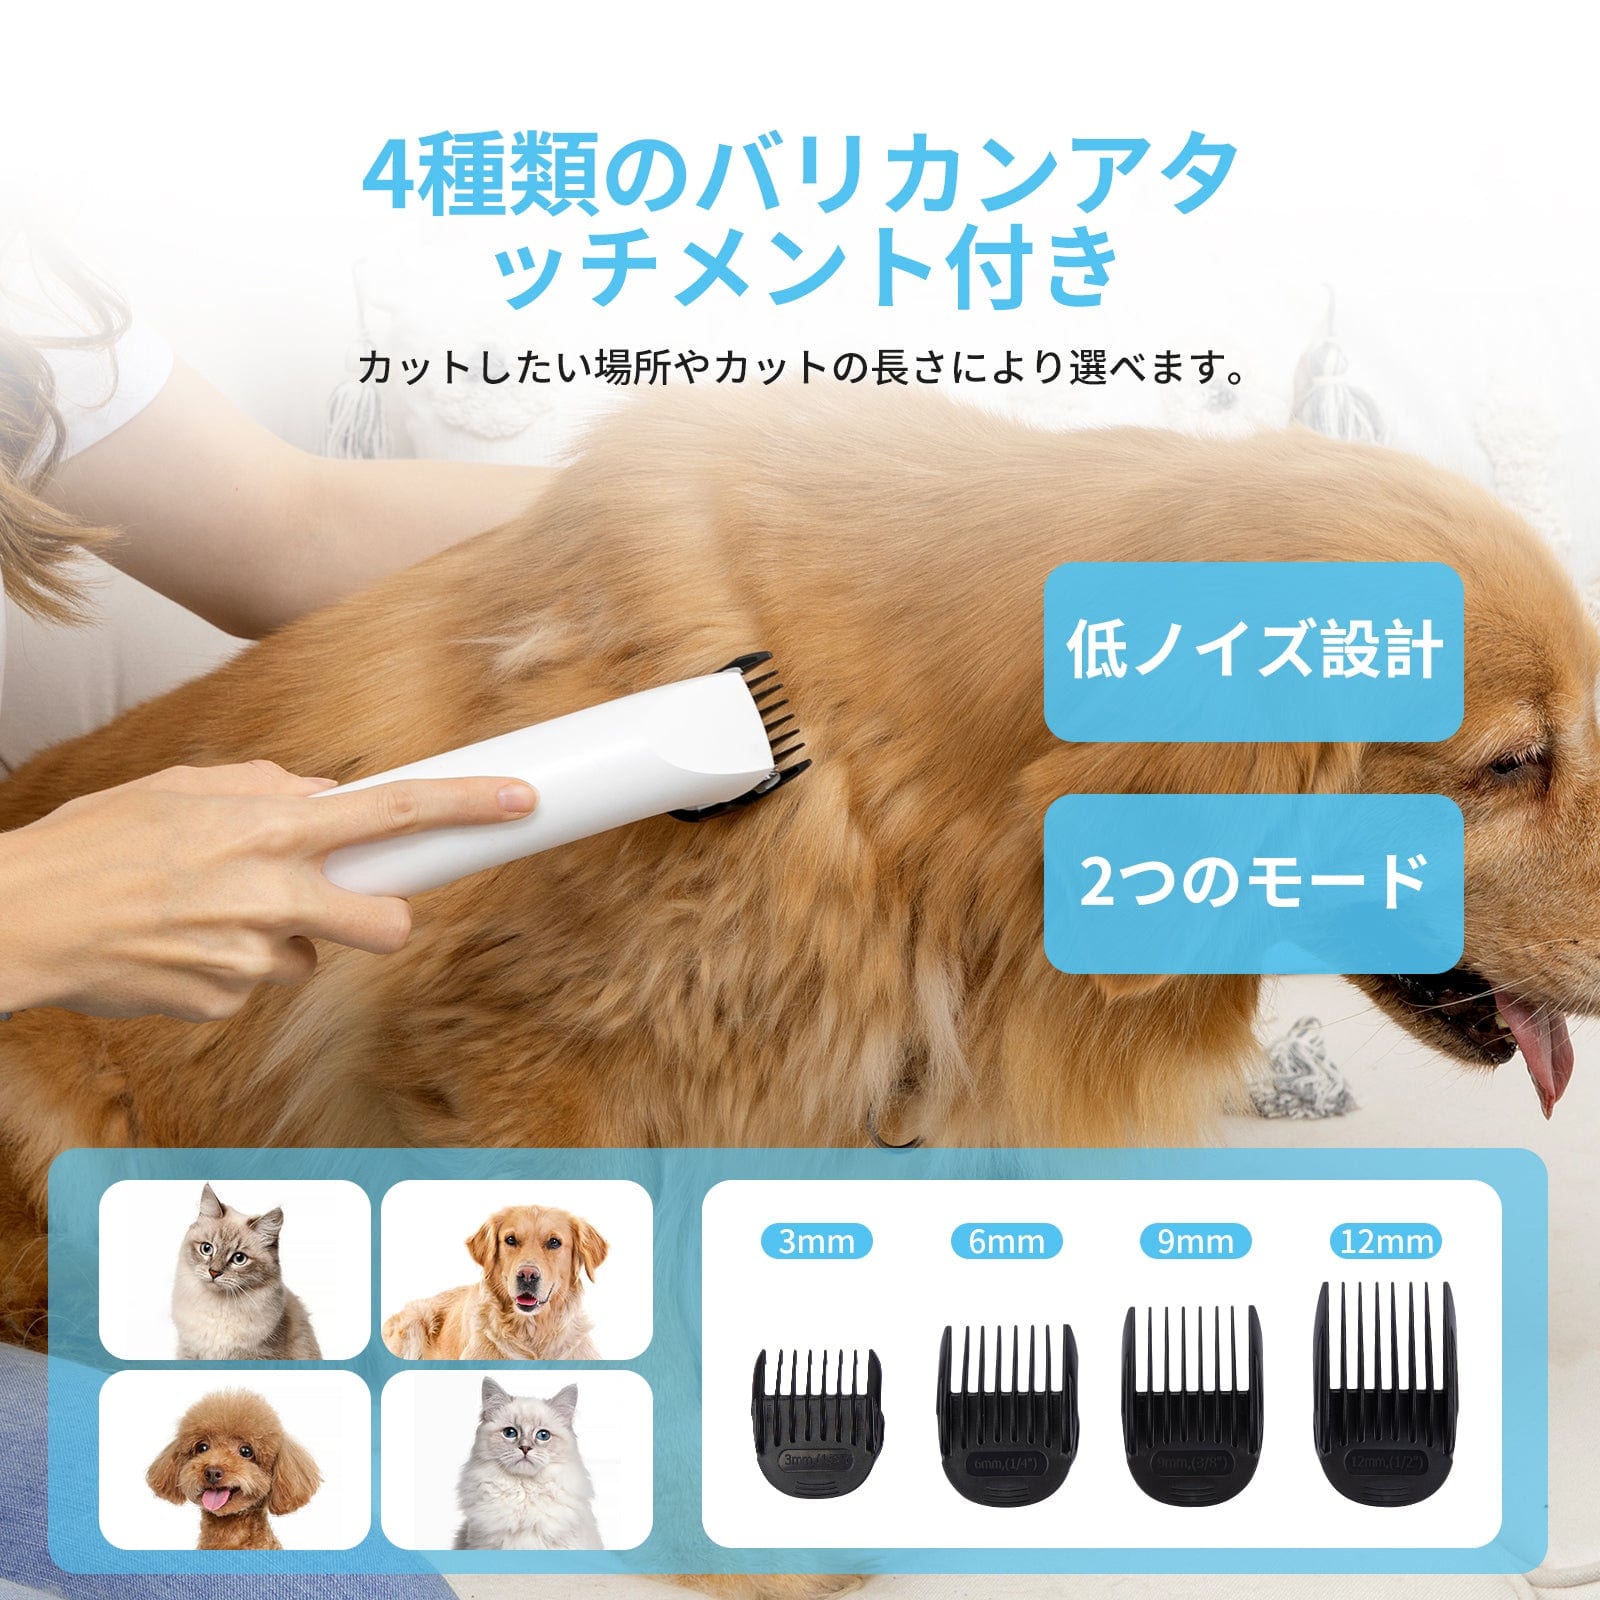 Dog Grooming Kit with 5 Professional Grooming Tools Pet Grooming Vacuum Kit